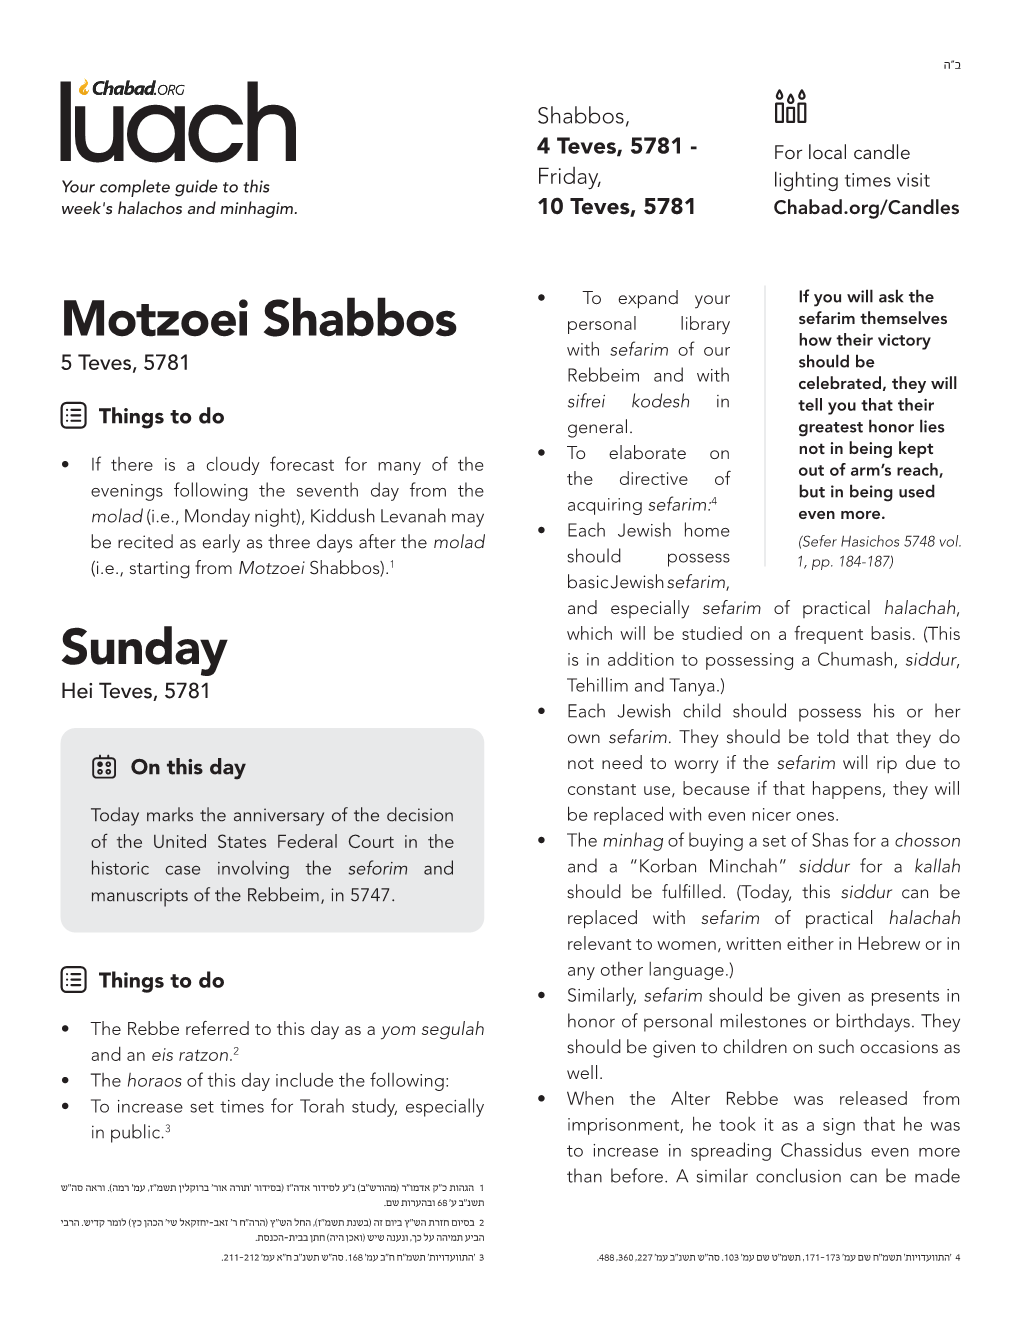 Motzoei Shabbos Sunday